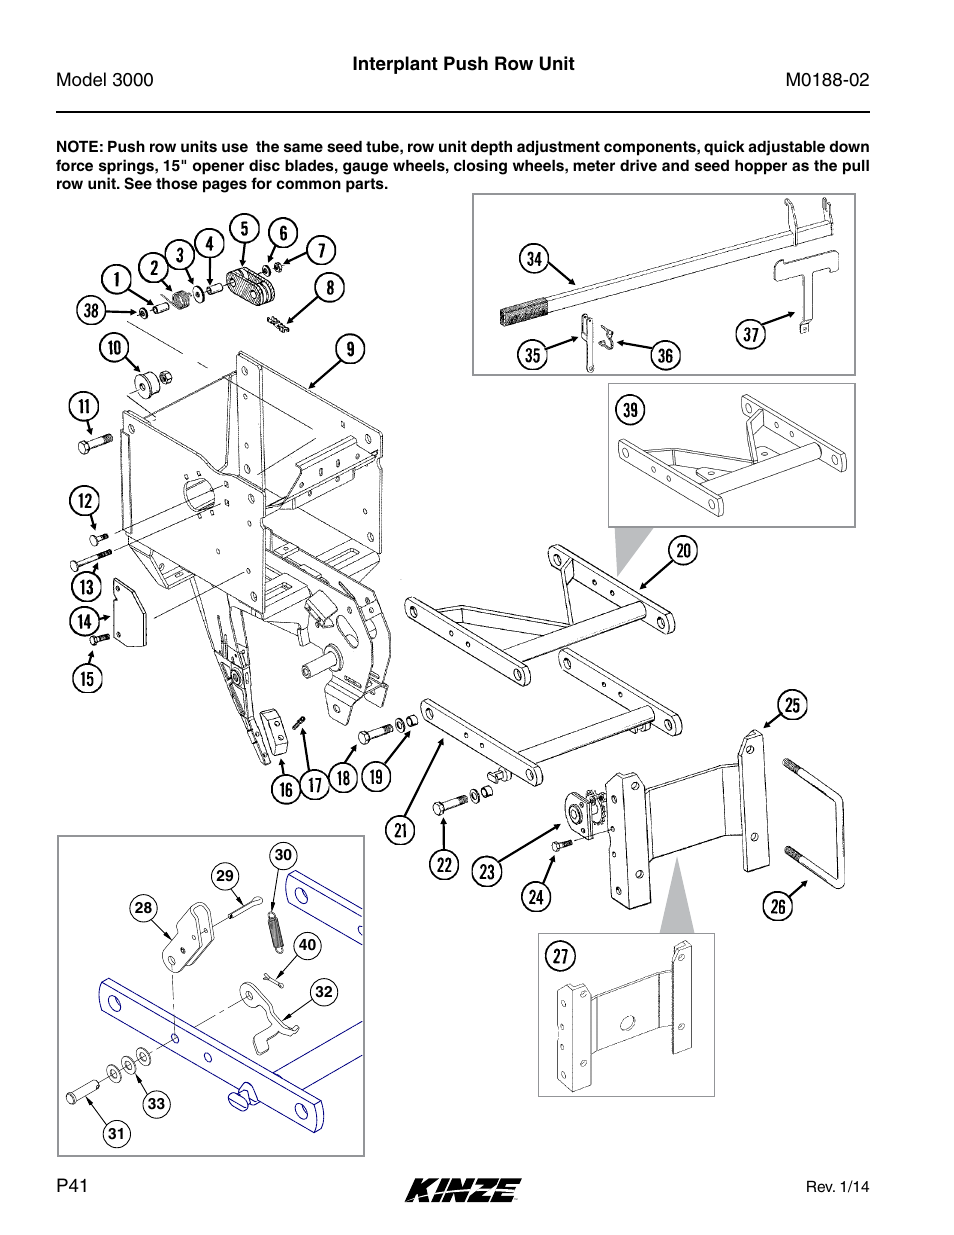 Interplant system, Interplant push row unit | Kinze 3000 Rigid Frame Planter Rev. 5/14 User Manual | Page 44 / 154